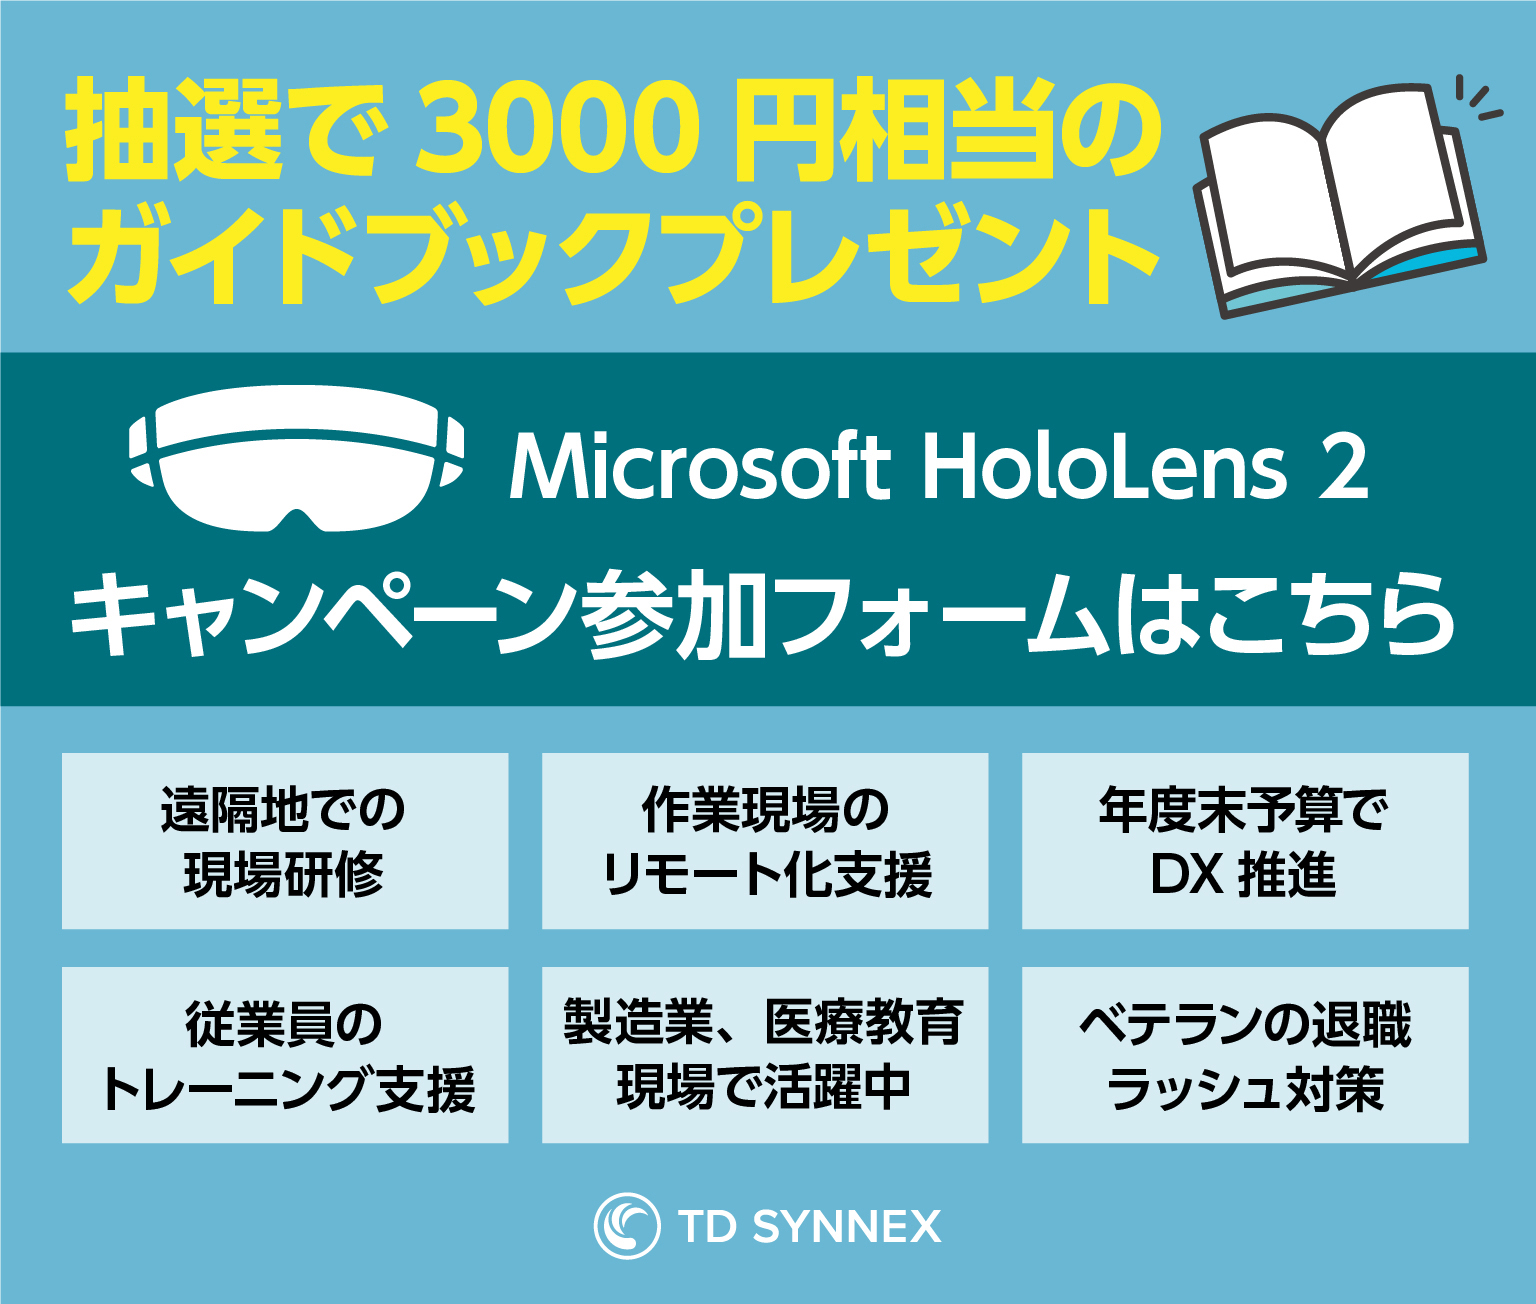 TD SYNNEXが導入を全面サポート HoloLens 2 空間コラボレーション DX活用 業務改革